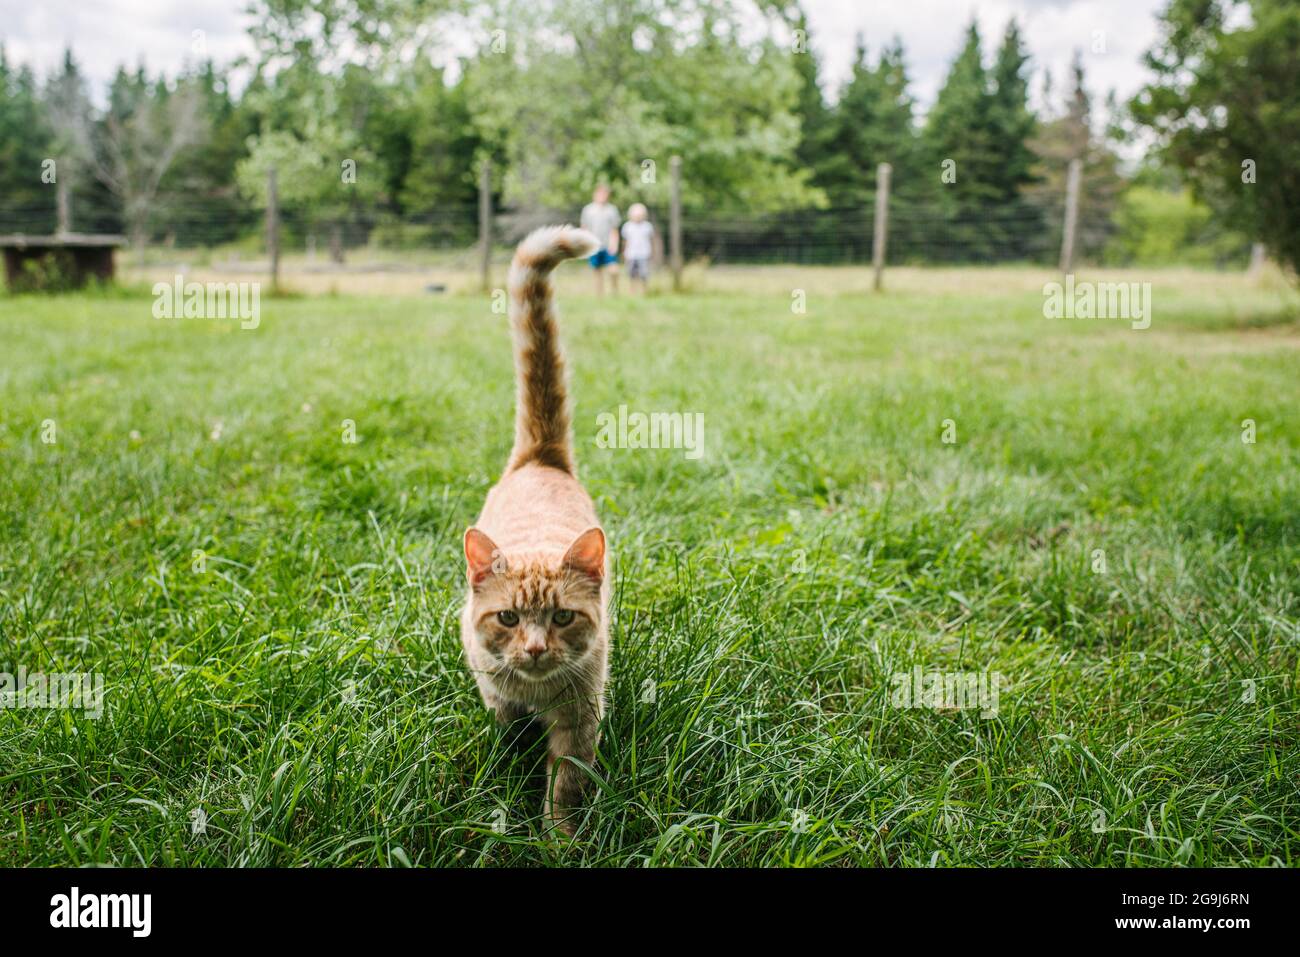 Canada, Ontario, Kingston, Ginger cat walking on grass Stock Photo